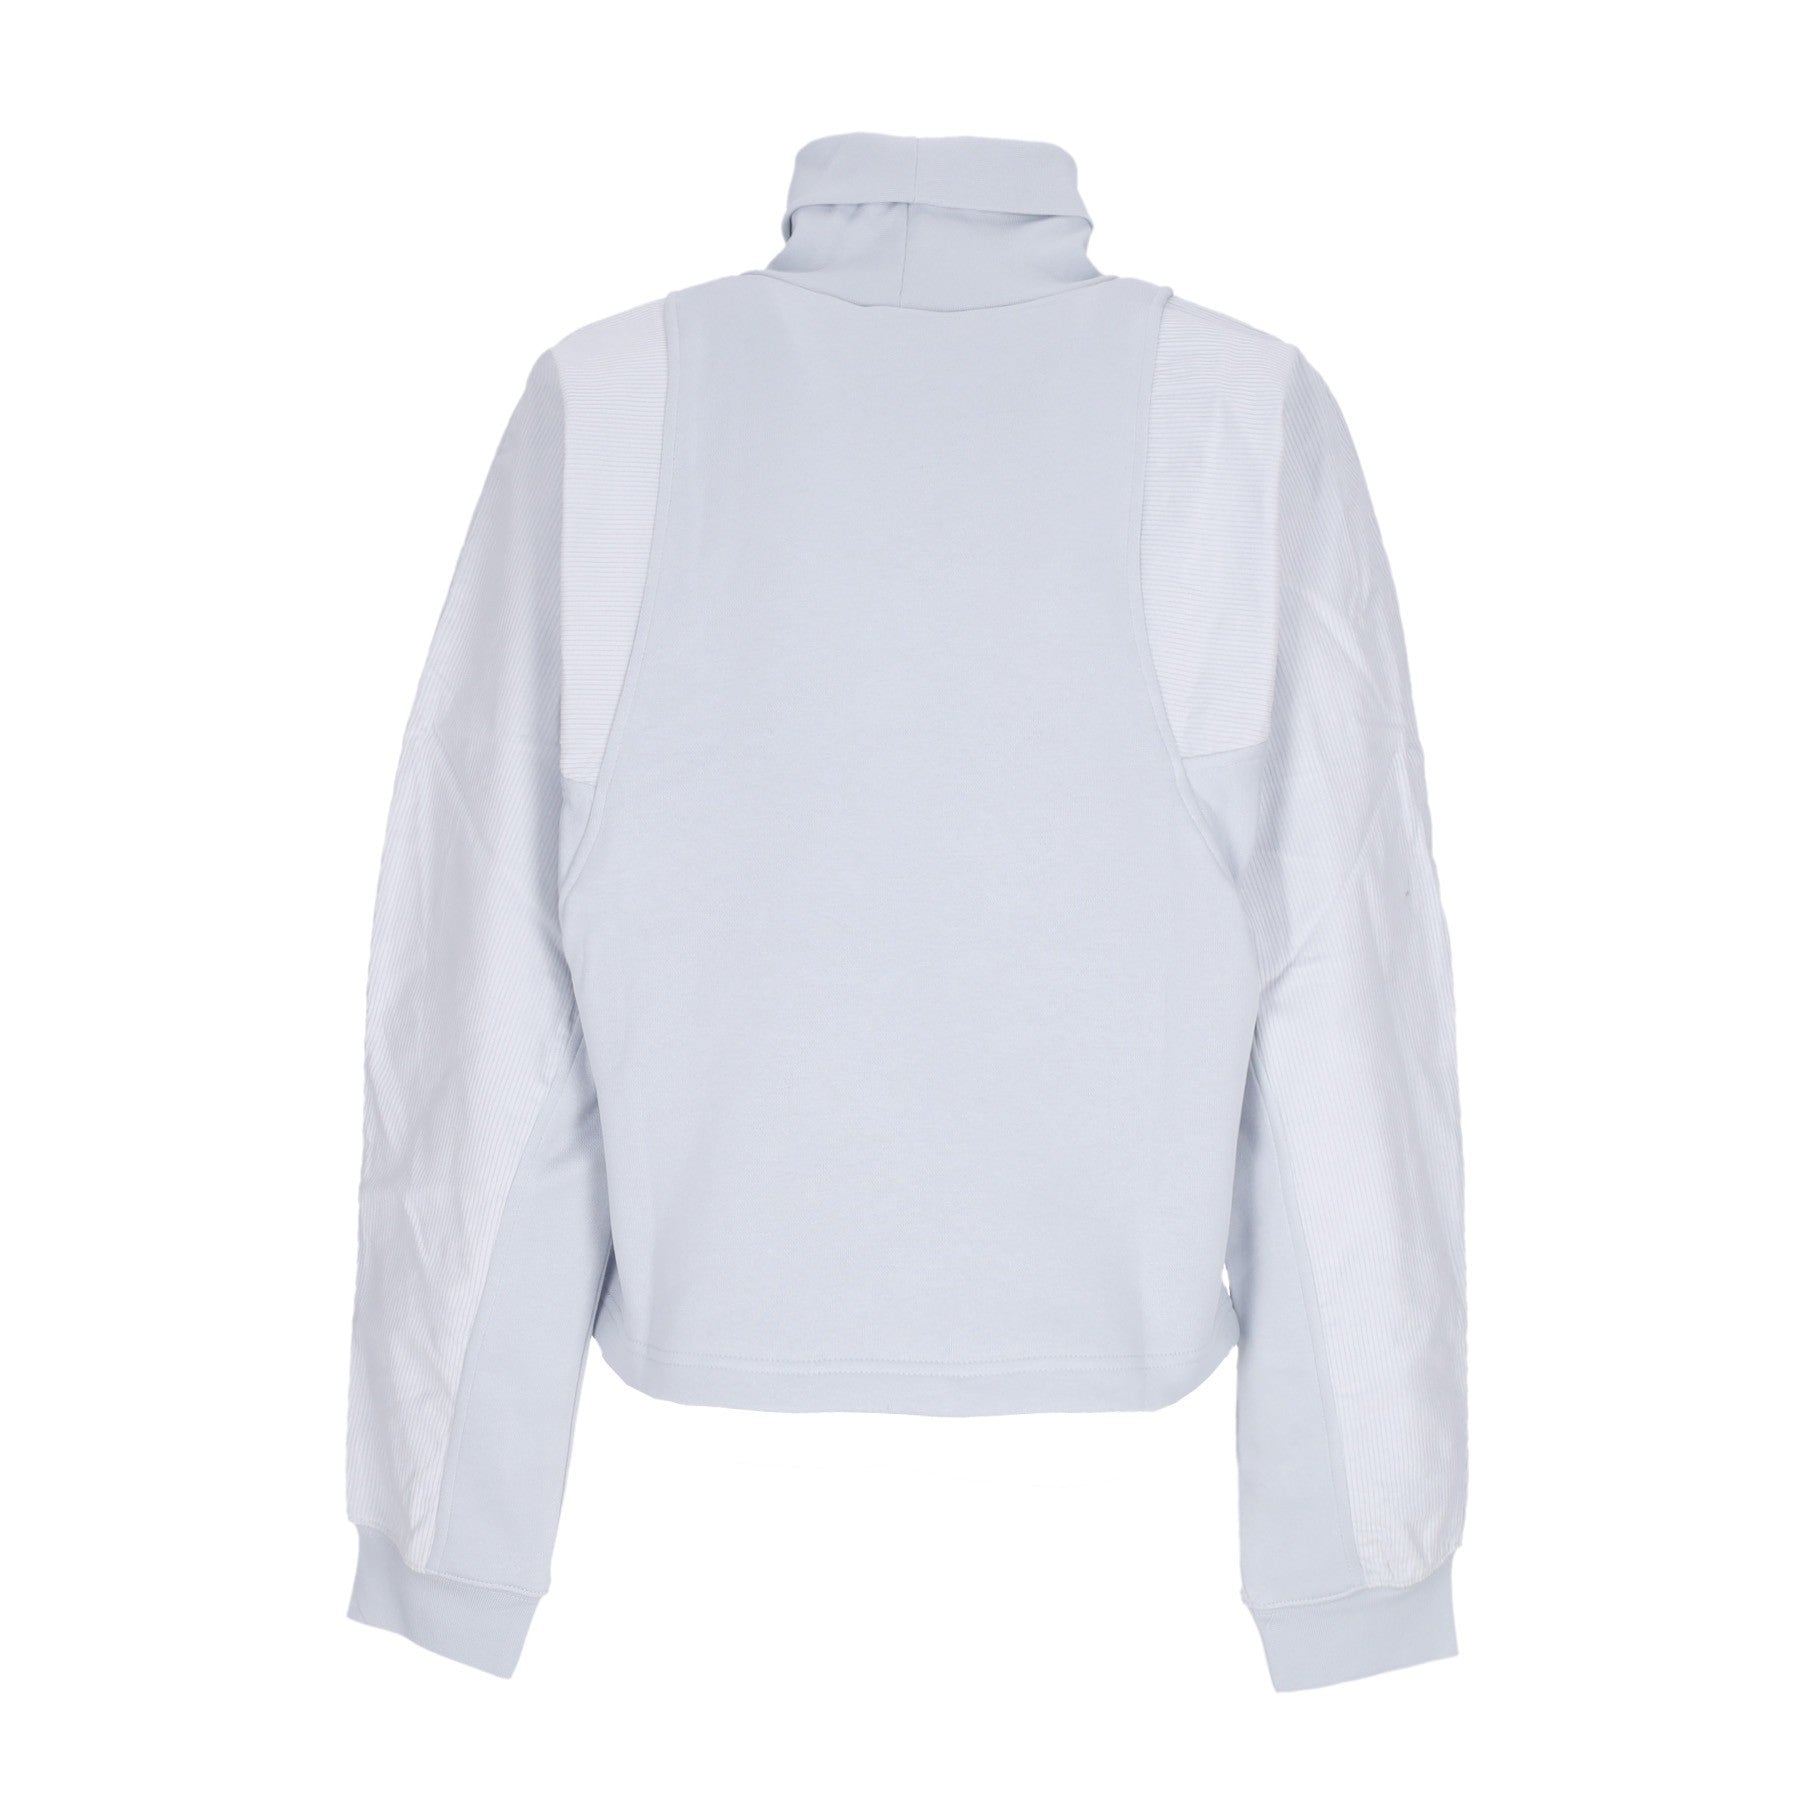 High Neck Sweatshirt Women Sportswear Air Corduroy Fleece Top